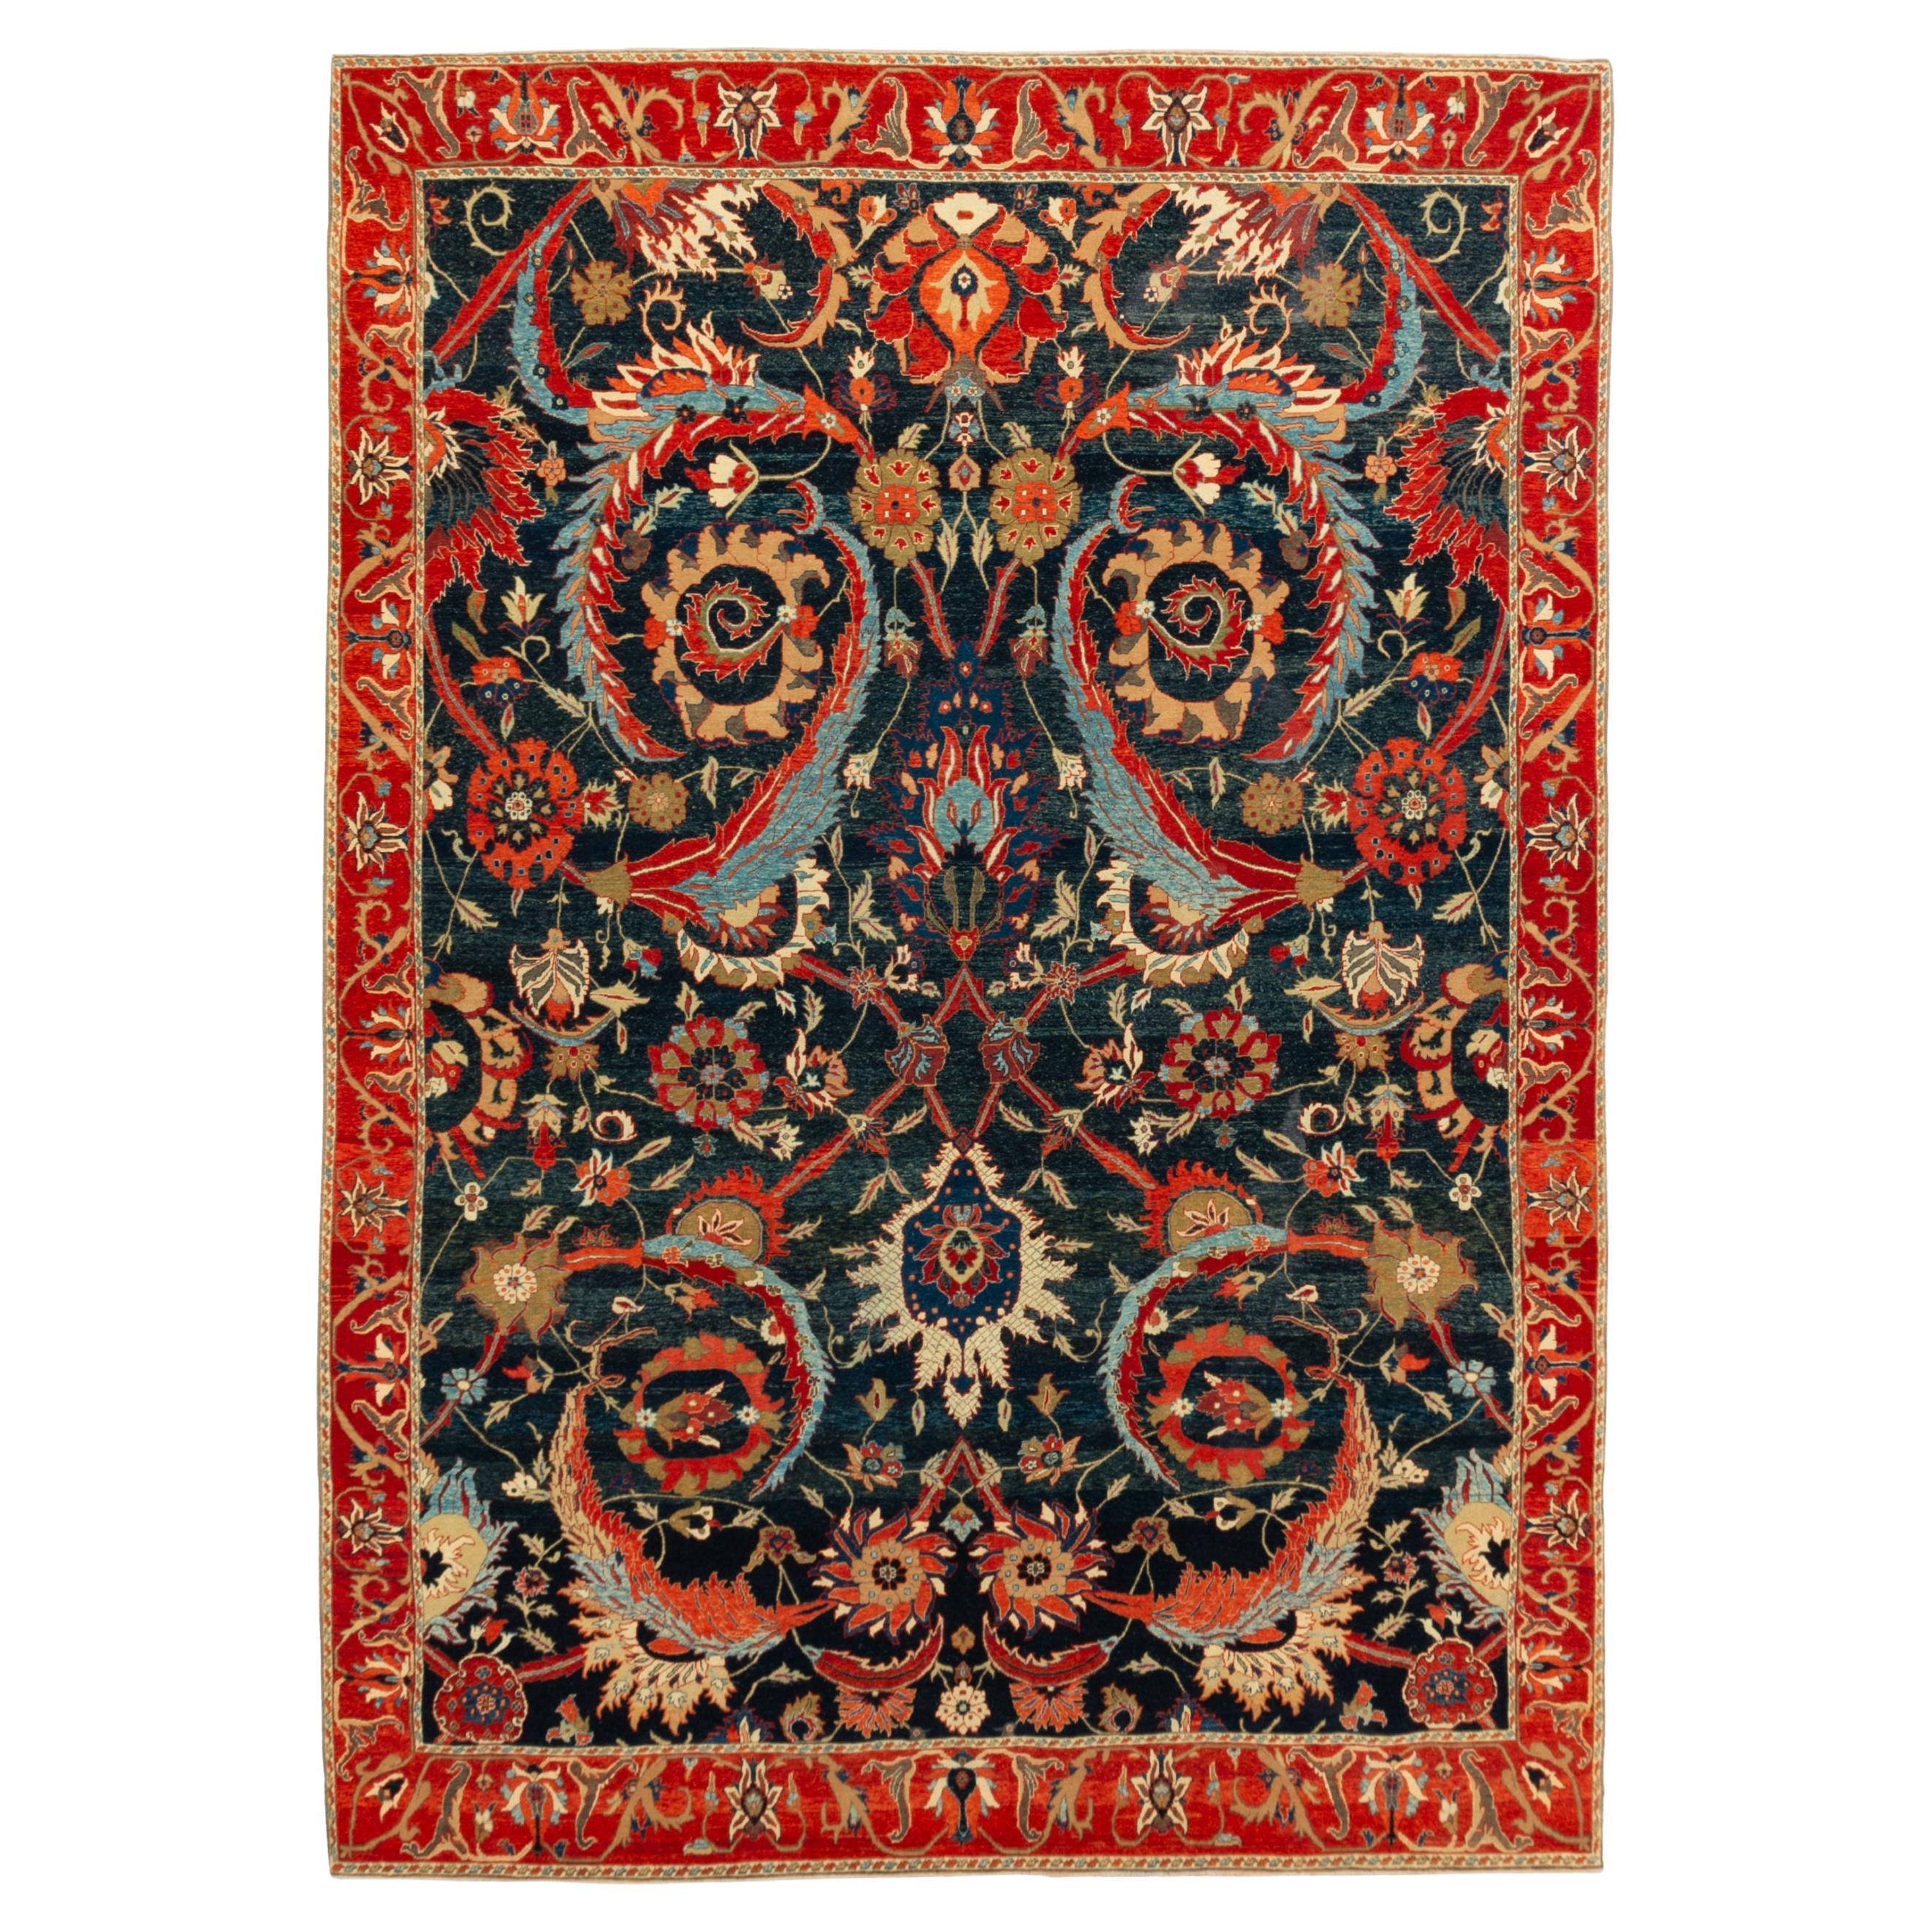 Ararat Rugs Kerman Vase Technique Carpet 17th Century Revival Rug, Natural Dyed